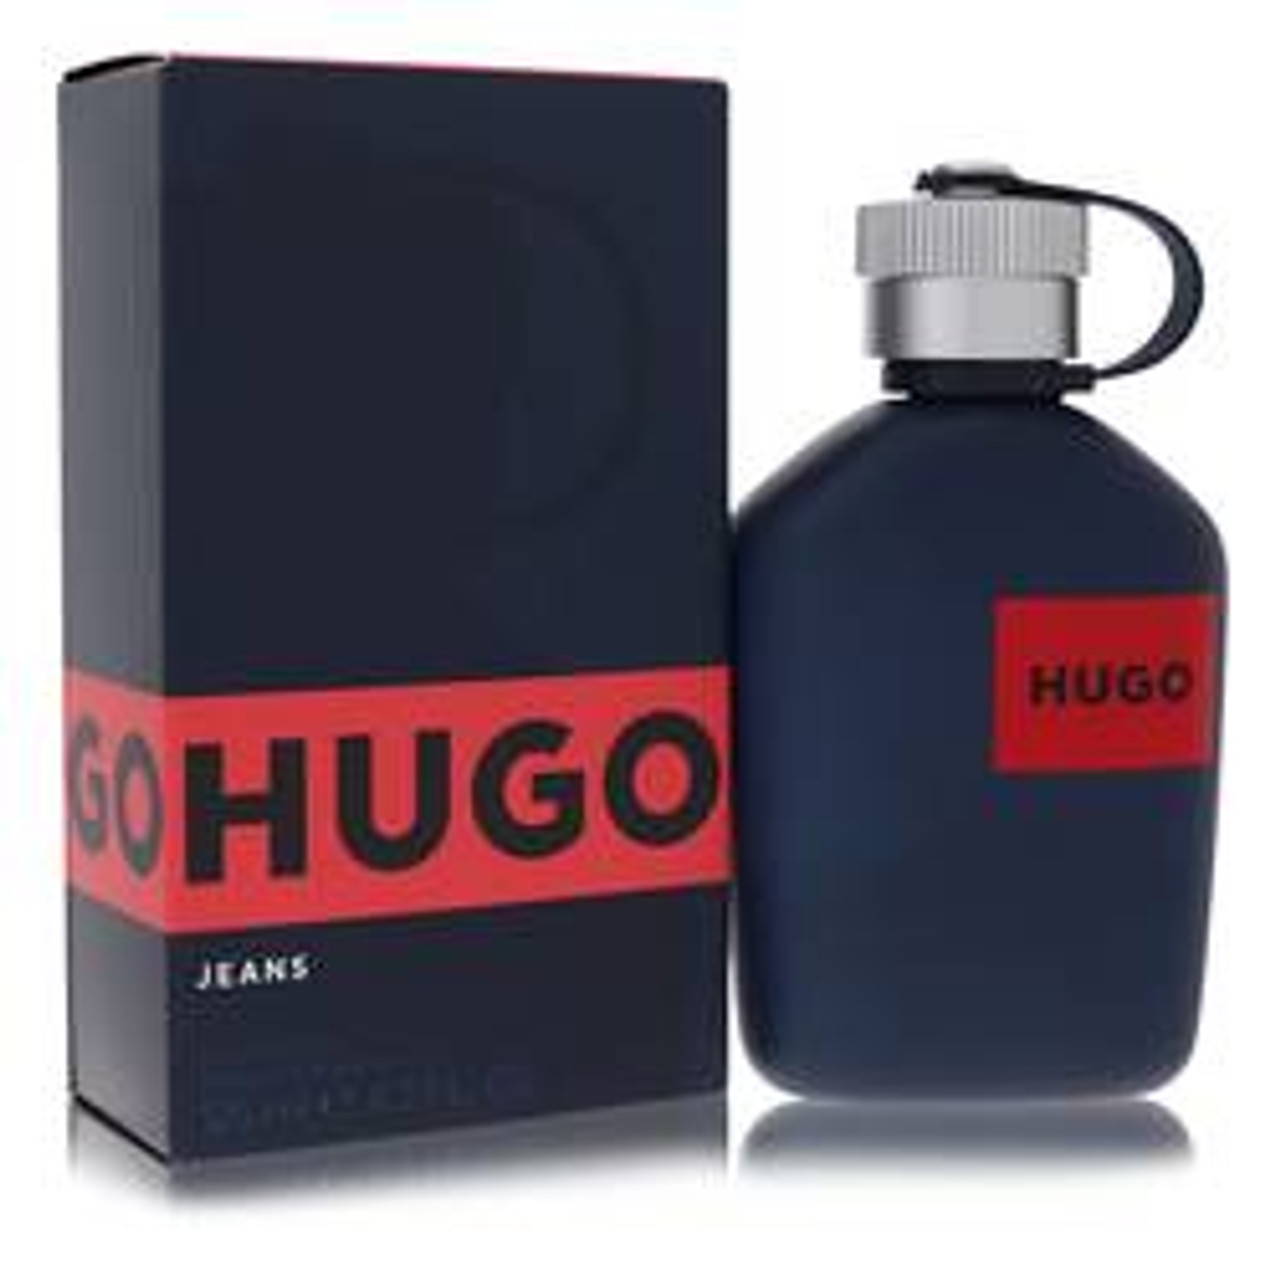 Hugo Jeans Cologne By Hugo Boss Eau De Toilette Spray 4.2 oz for Men - *Pre-Order